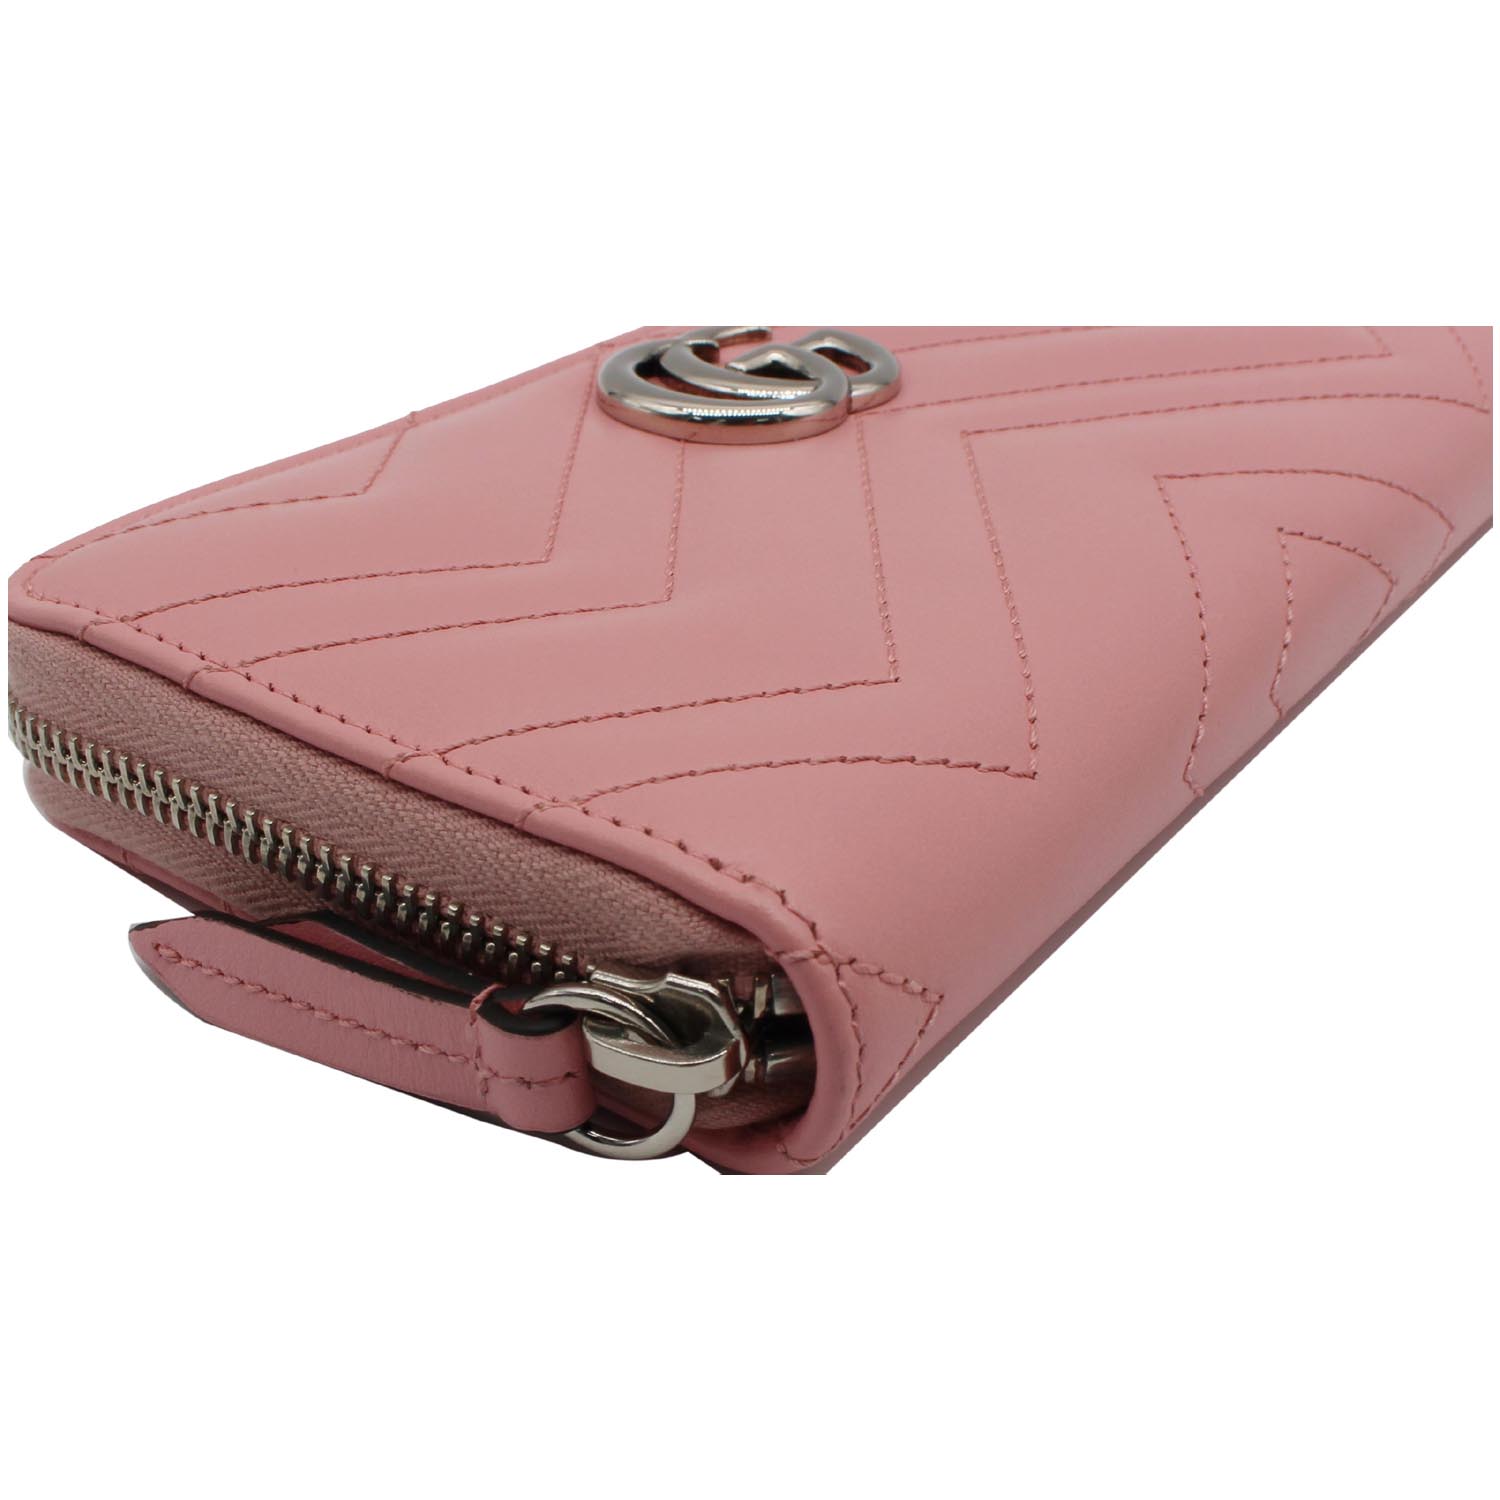 GUCCI Calfskin Matelasse GG Marmont Zip Around Key Case Perfect Pink 301472